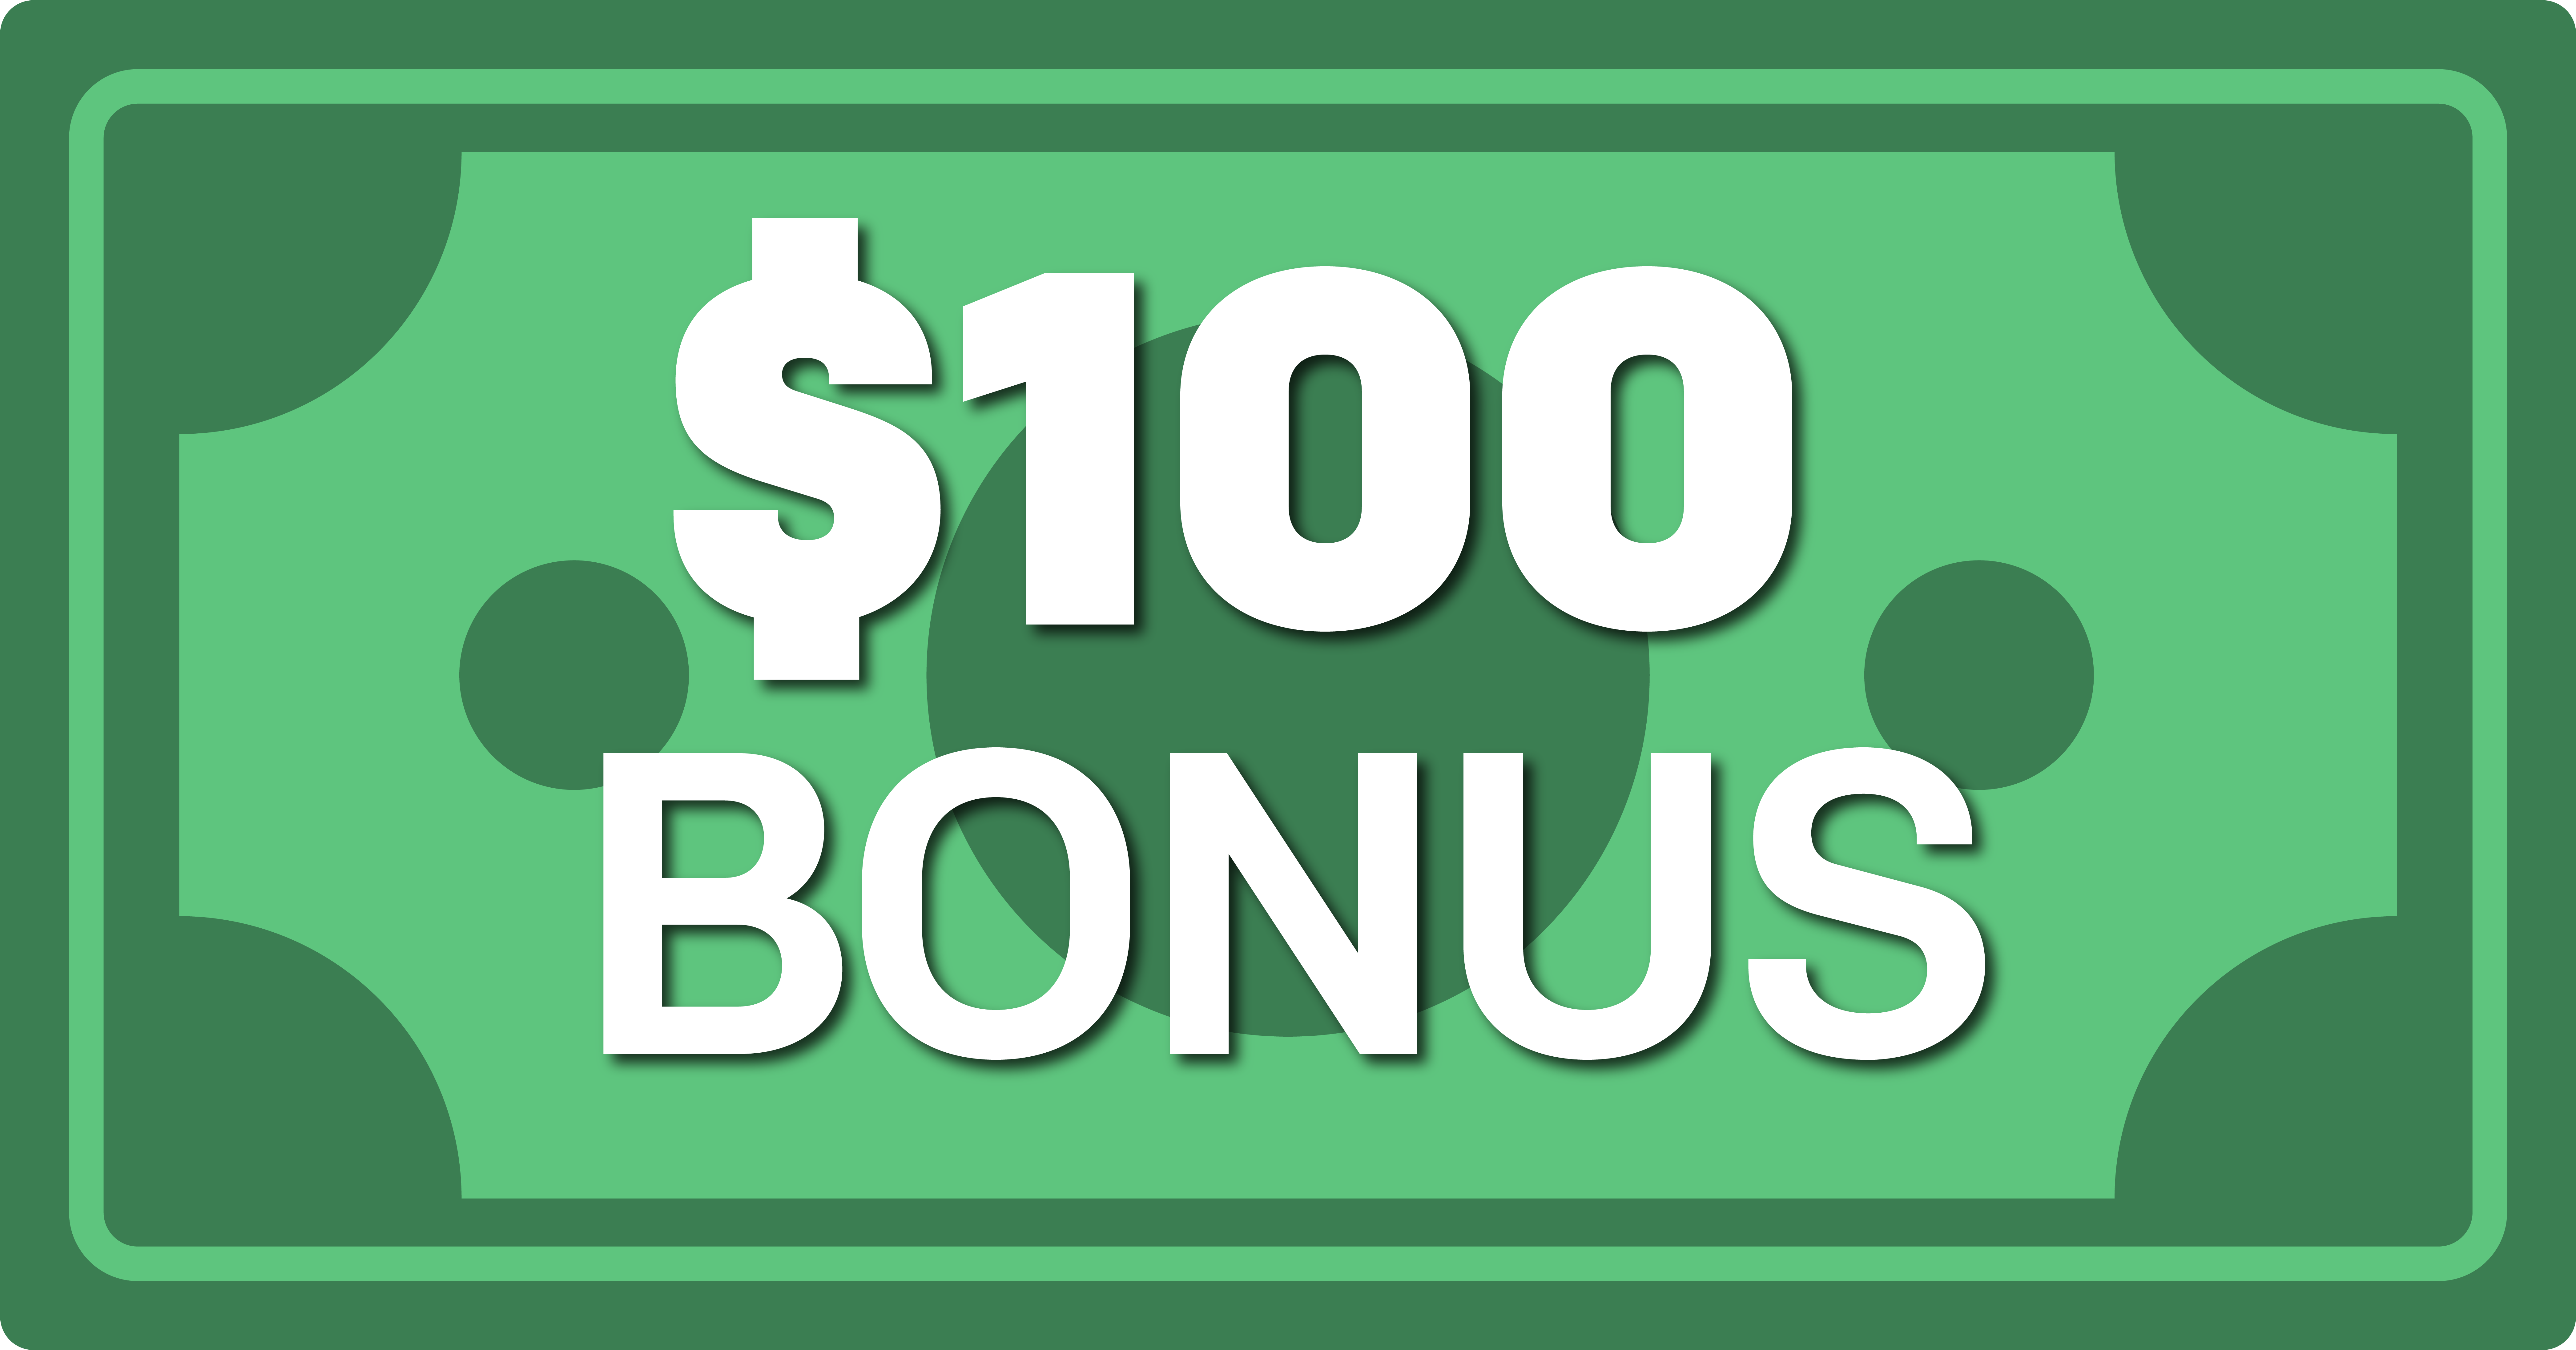 Dollar-Bill-Bonus-Design_$100